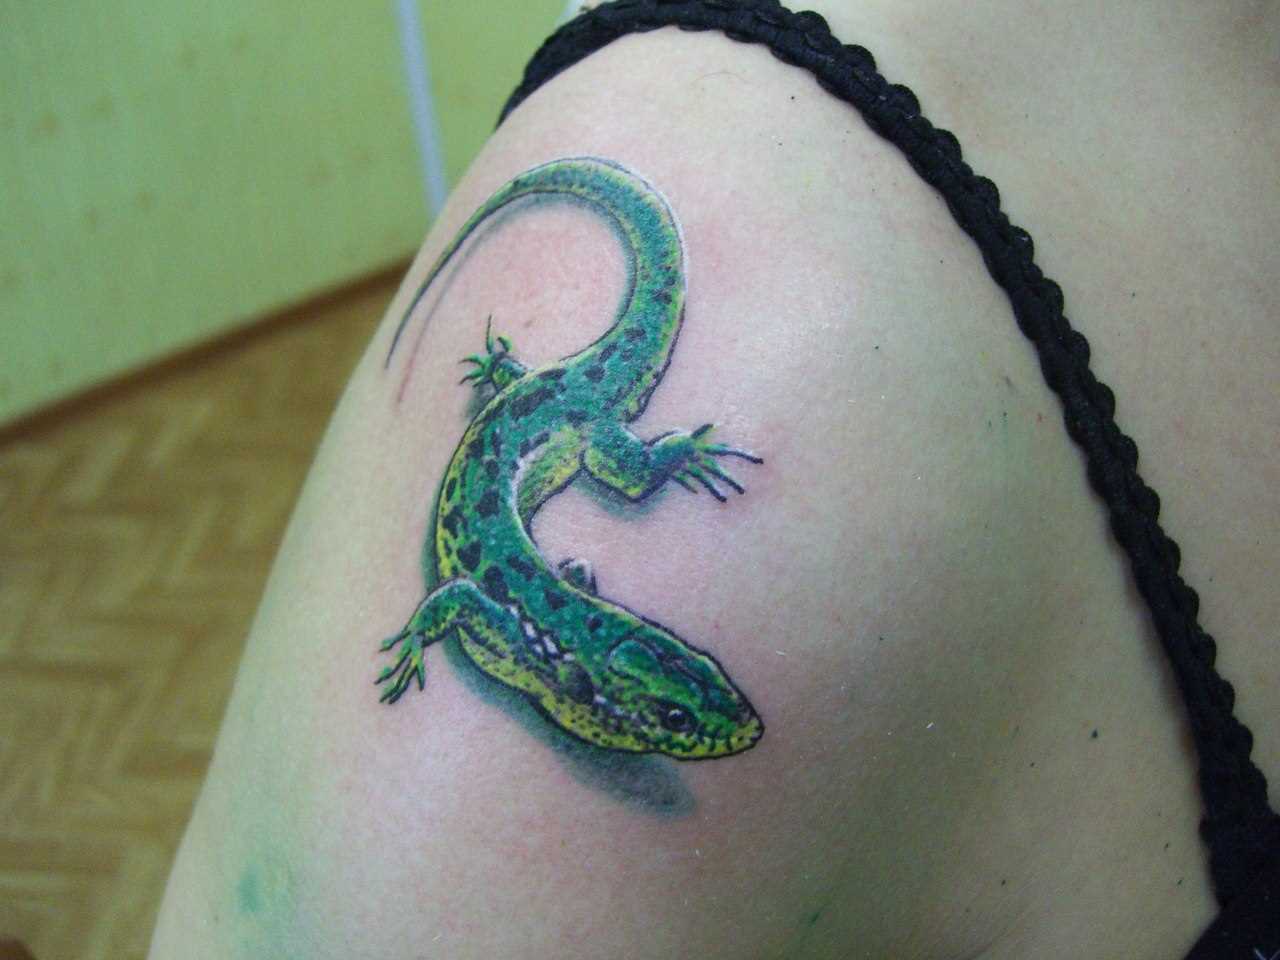 A tatuagem no ombro da menina - lagarto